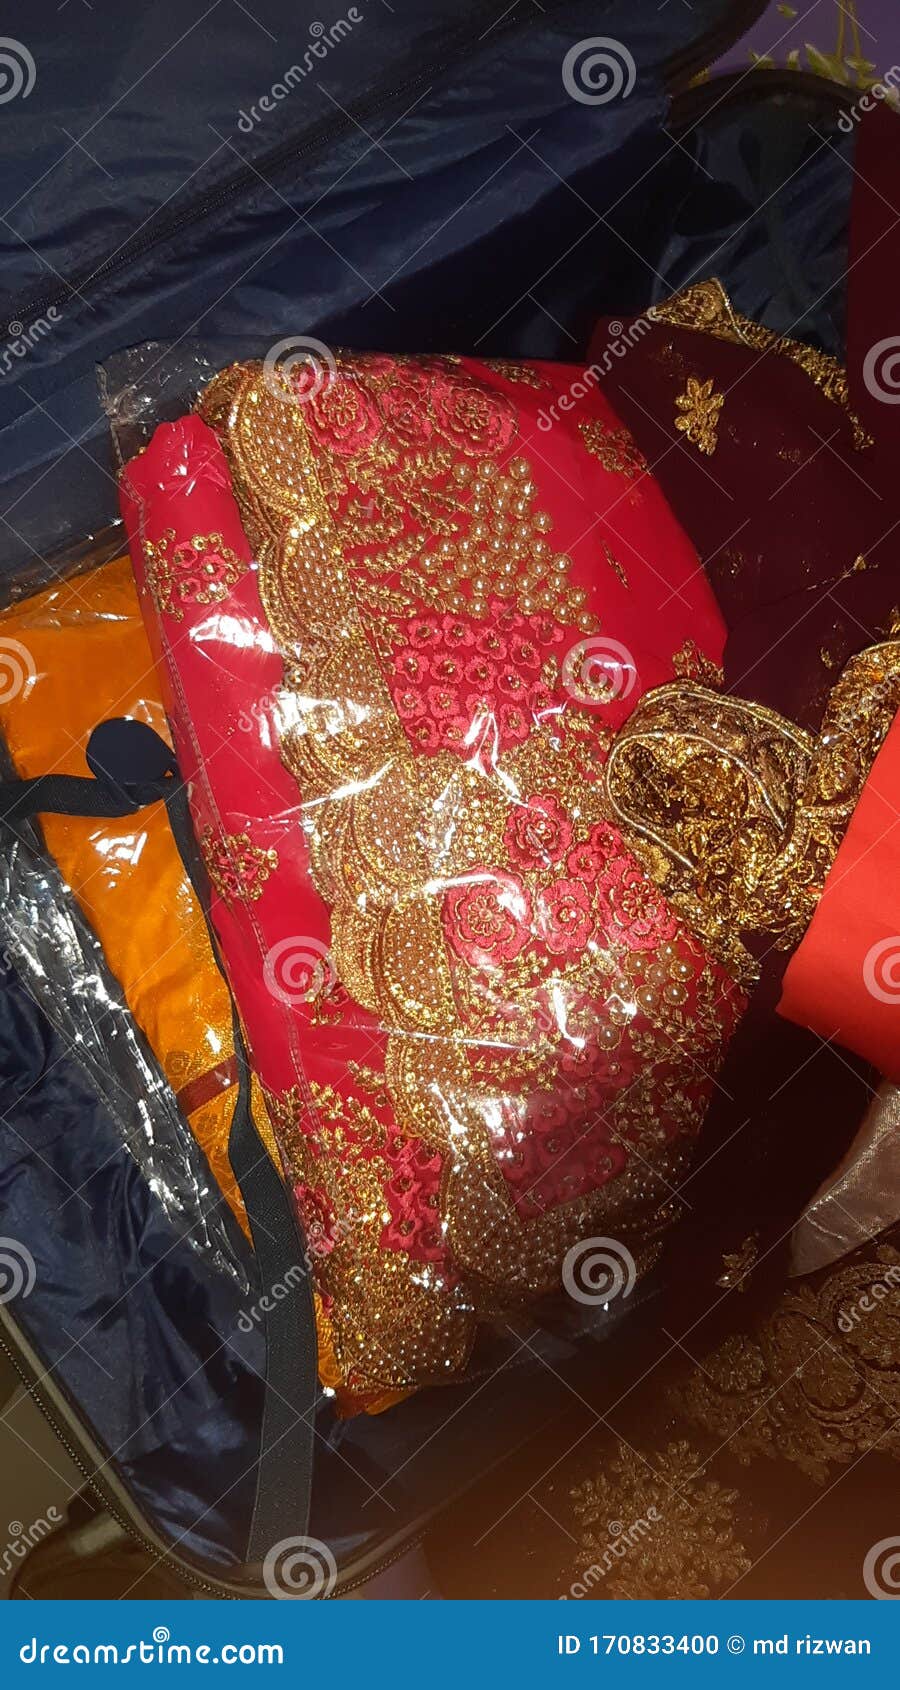 Pin on Indian bride in sari